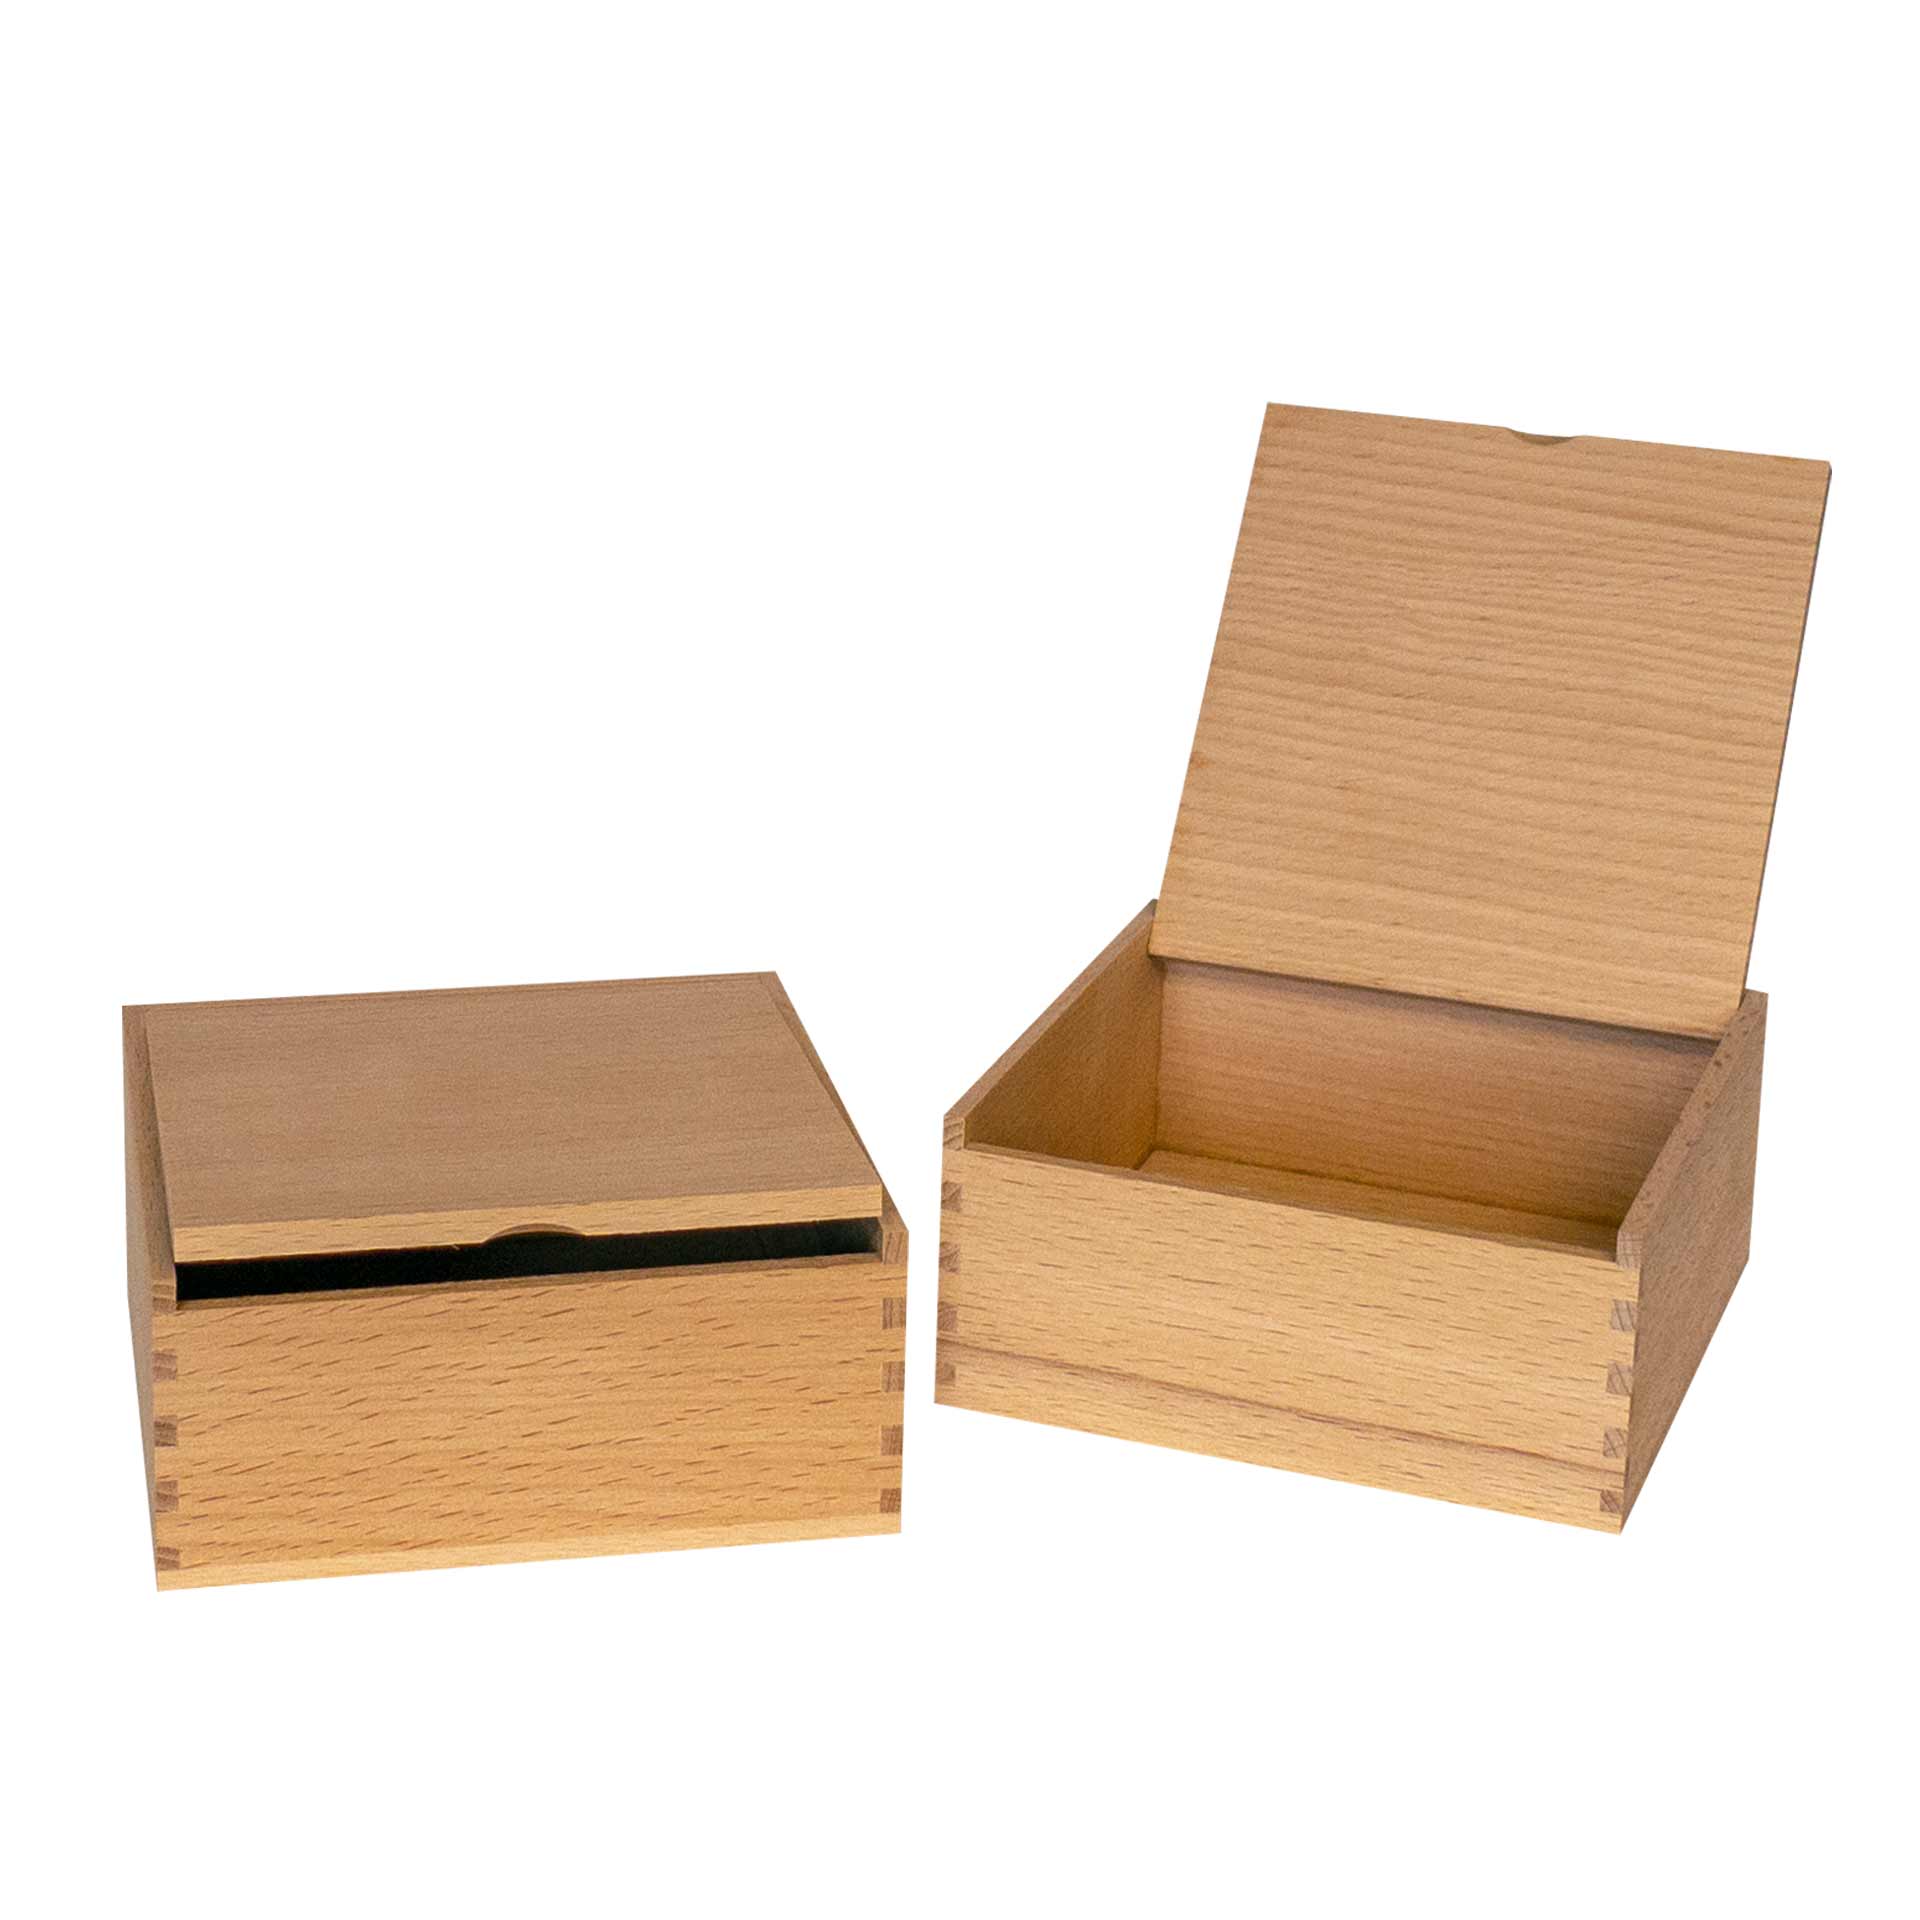 Holzkiste Holzbox aus Buche lackiert 60 x 40 x 21 cm